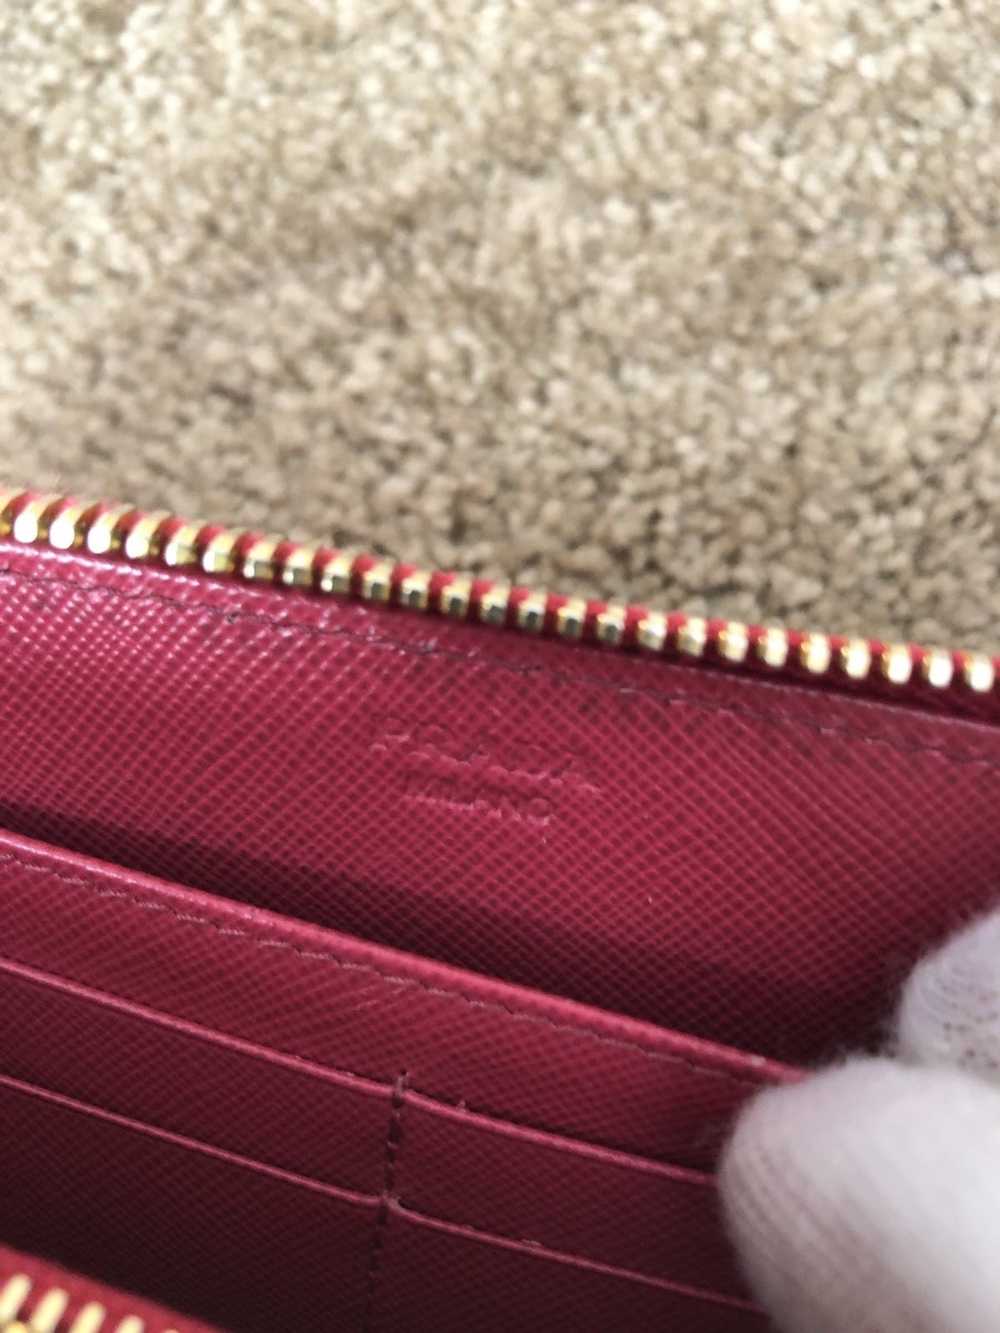 Prada Prada saffiano metal leather zippy wallet - image 6